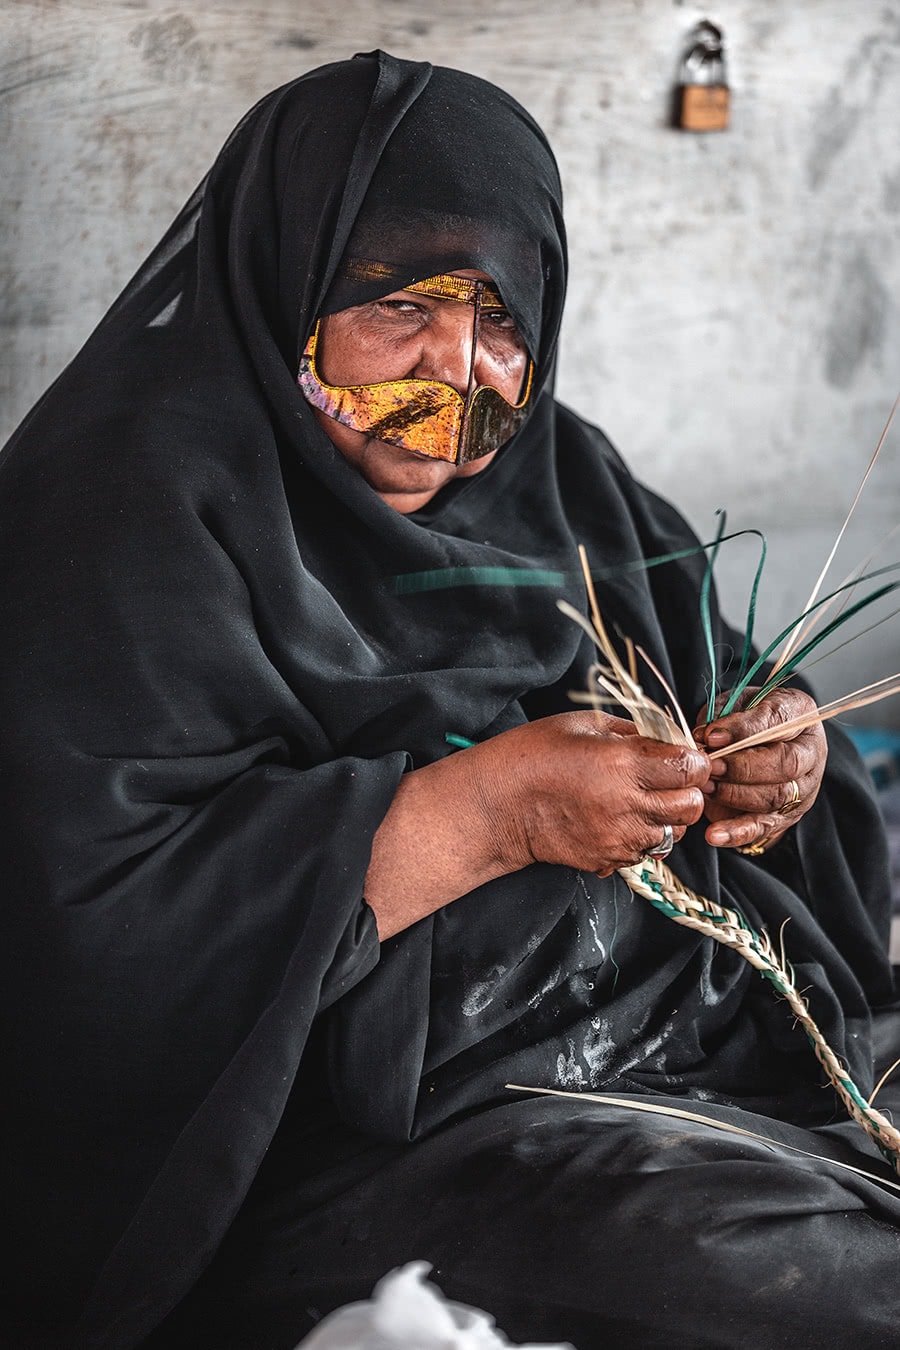 A woman wearing a burka at the Al Ain souk.